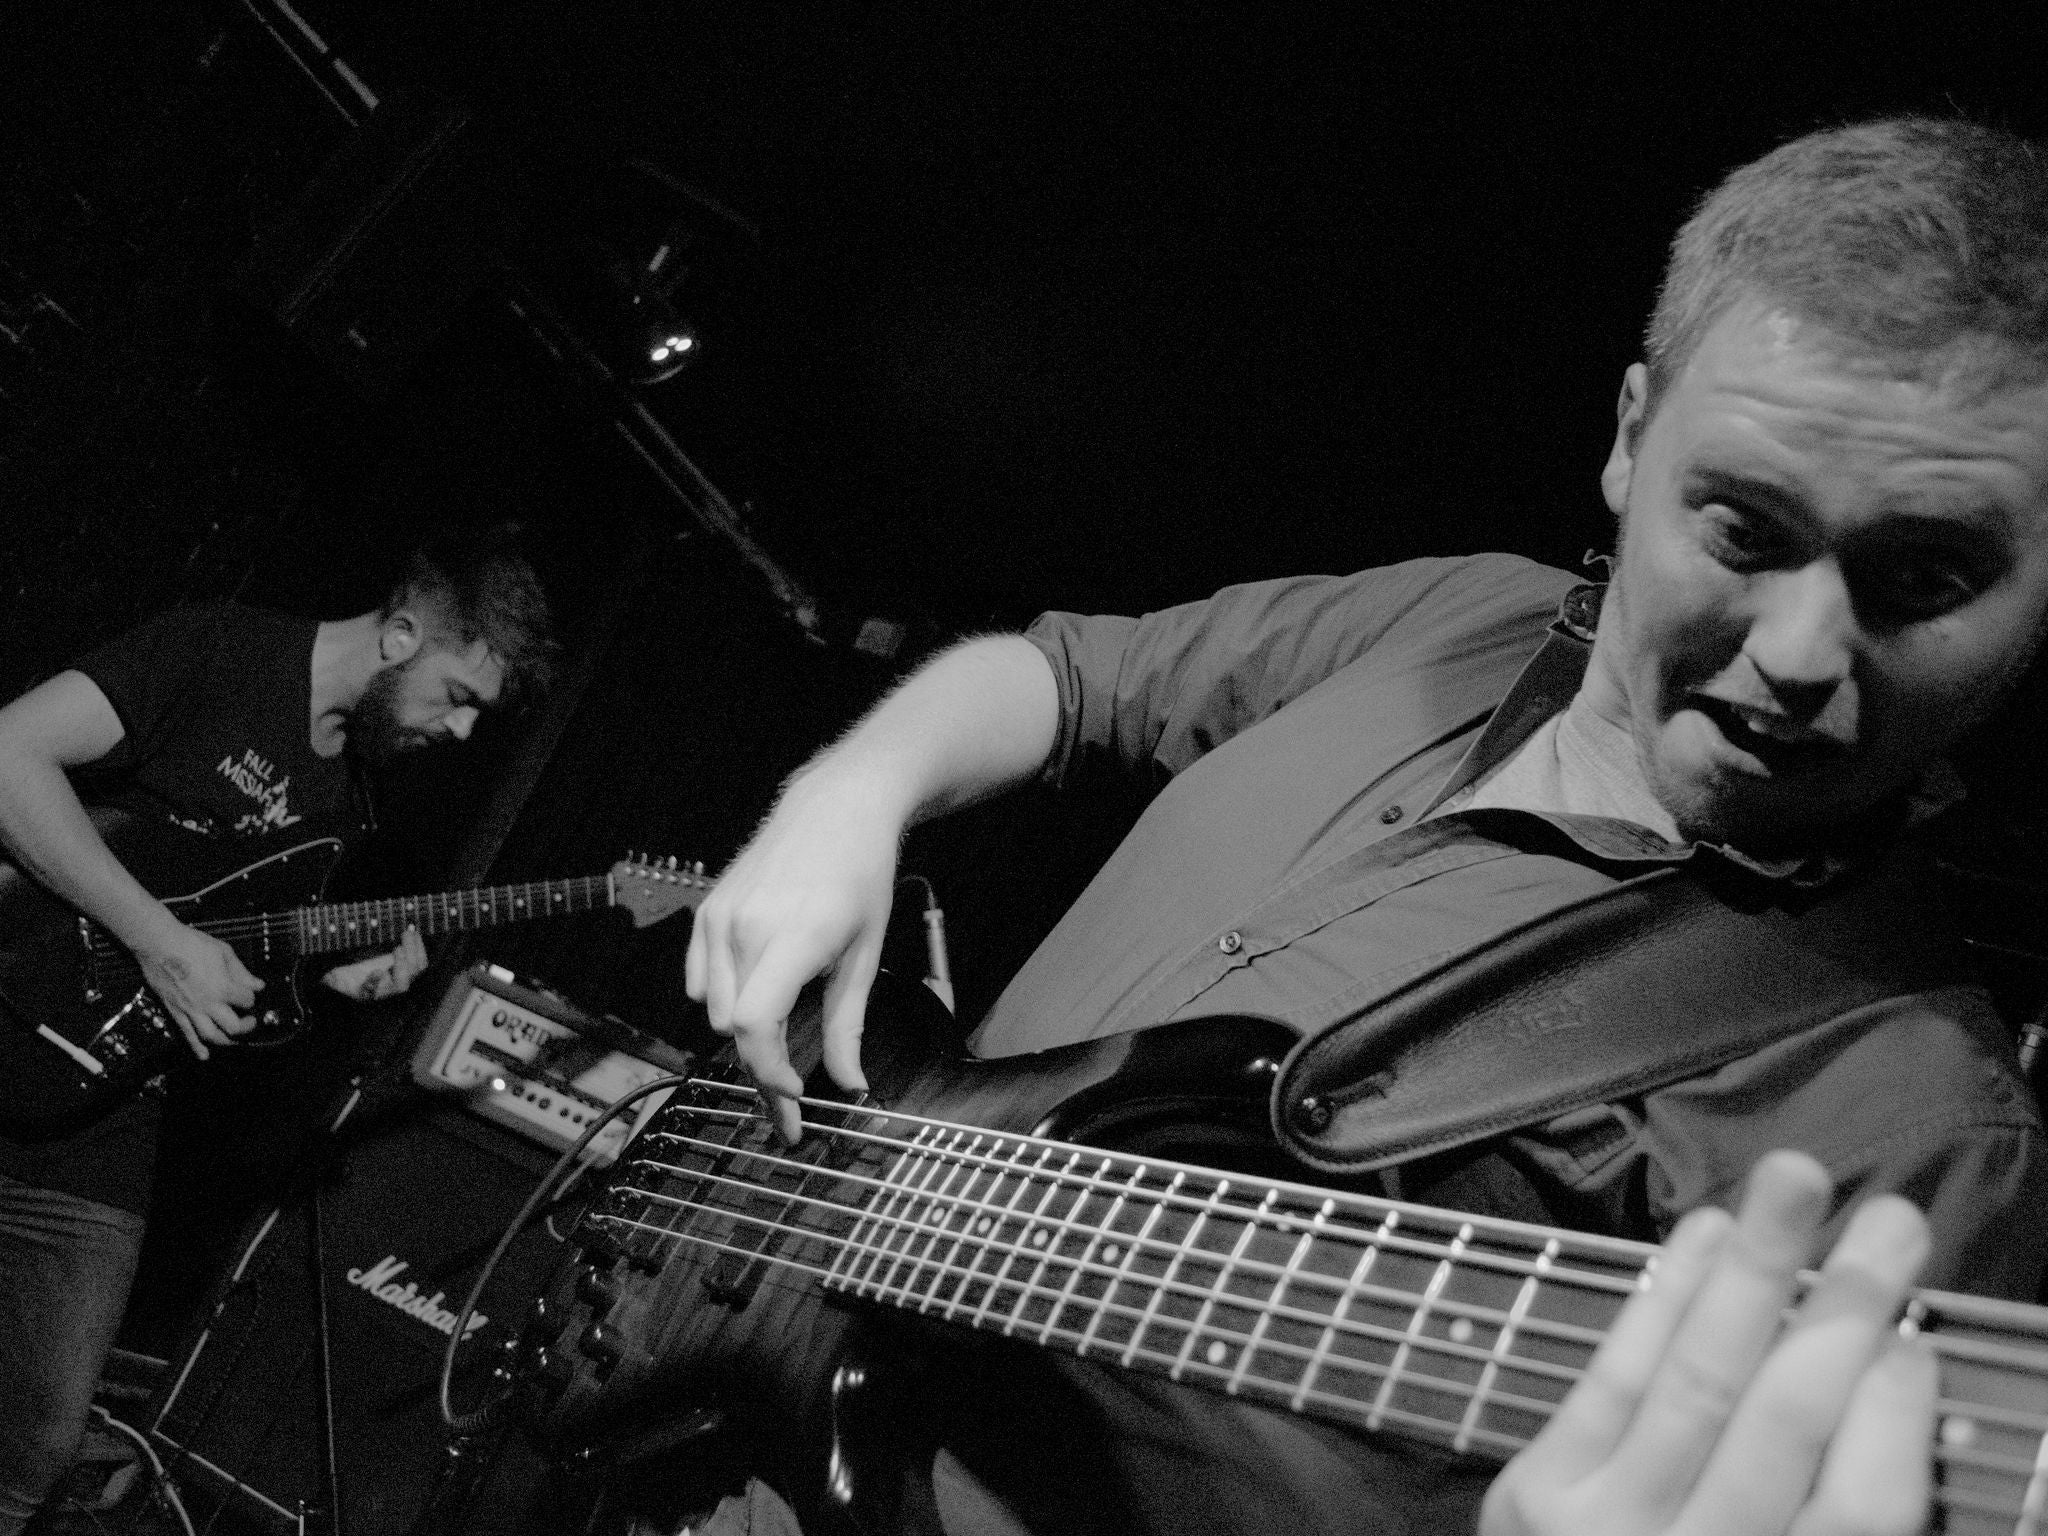 &#13;
Guitarist Blaine Thompson, left, and bassist John Niblock on stage at The Black Heart, London Paul Sutherland&#13;